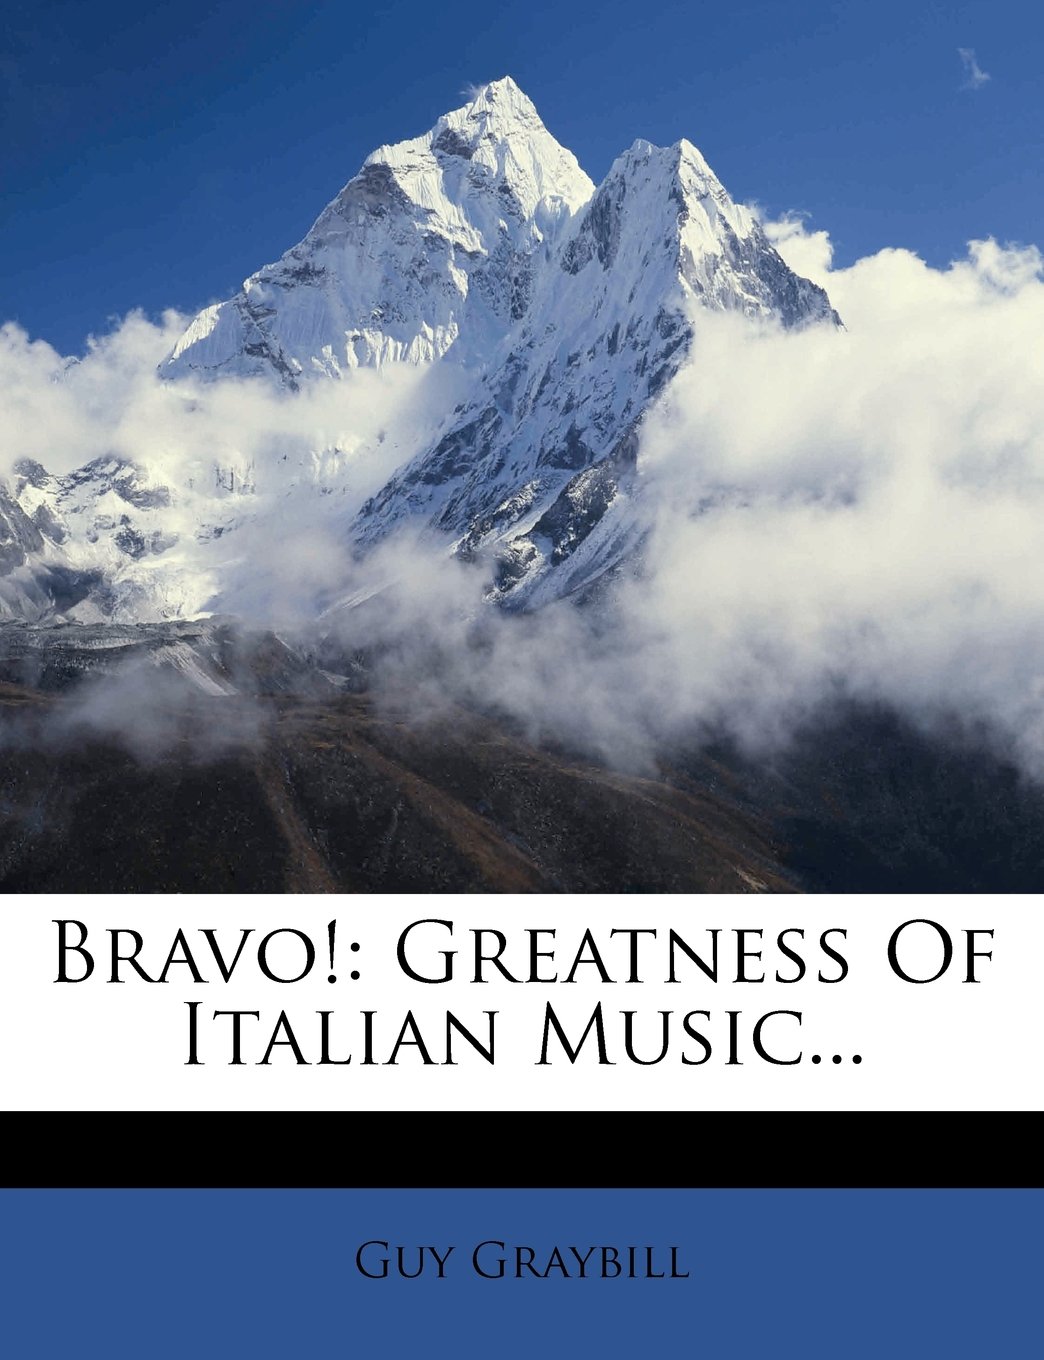 Dante University Press Publishes Bravo! Greatness of Italian Music